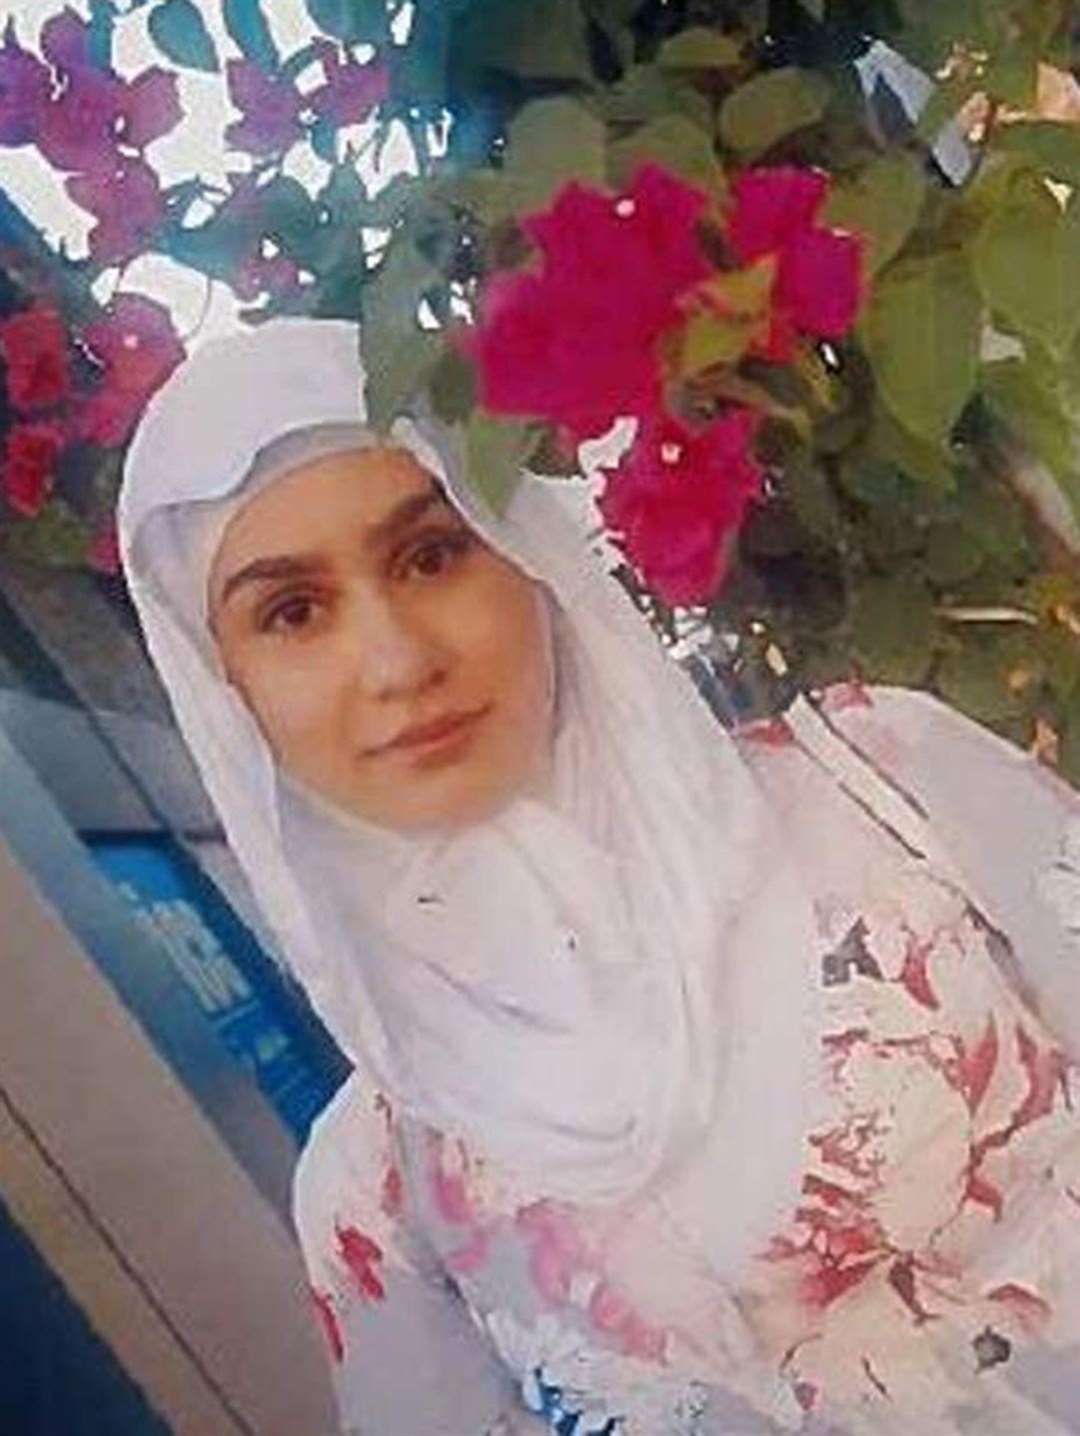 Aya Hachem was shot dead in the street in Blackburn (Lancashire Police/PA)